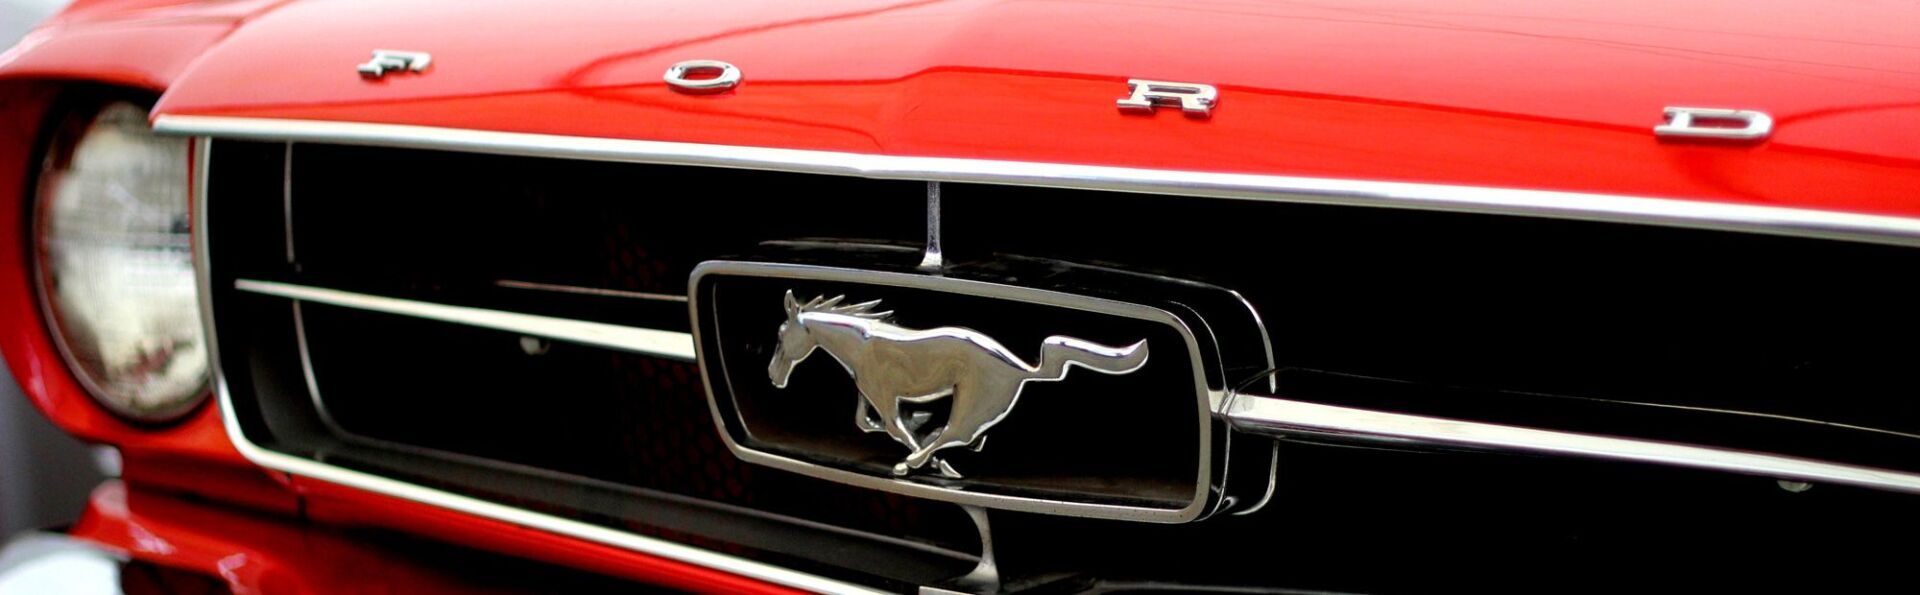 David Motorentechnik Selm Titelbild Mustang